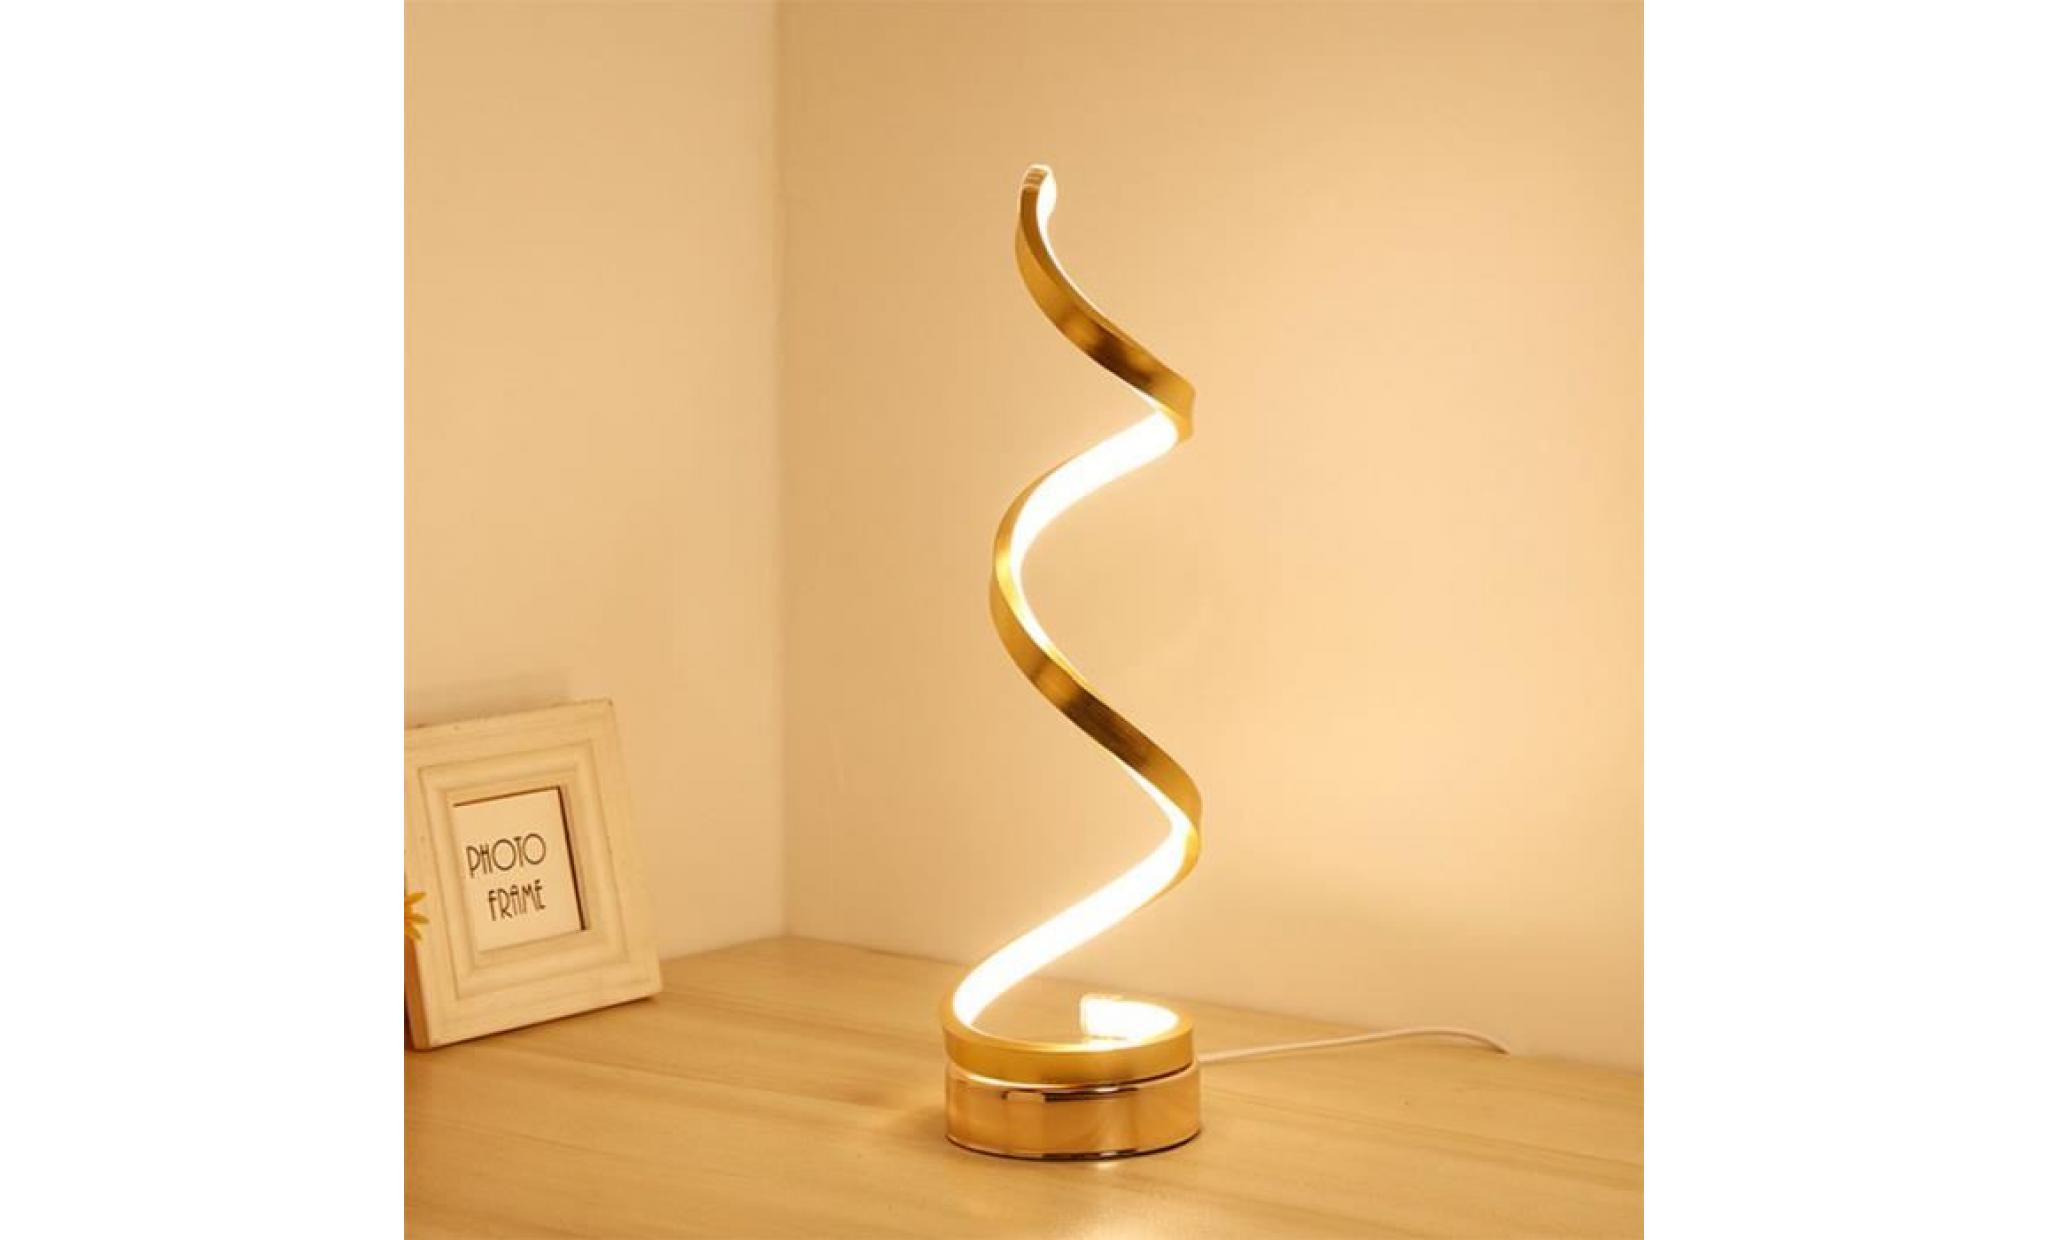 spirale led lampe de bureau 12w blanc chaud dimming incurvée acrylique lampe de table led design minimaliste creative